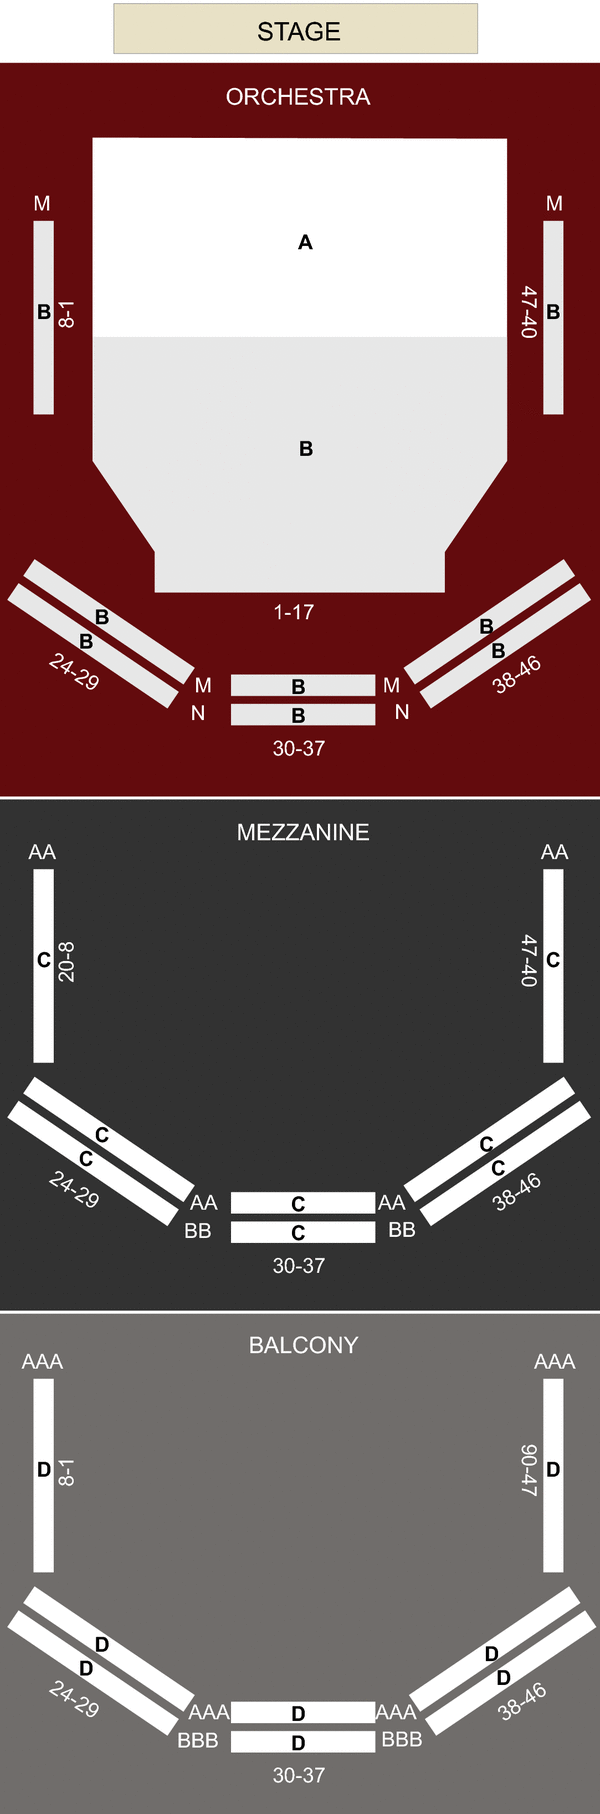 Owen Goodman Theater Seating Chart